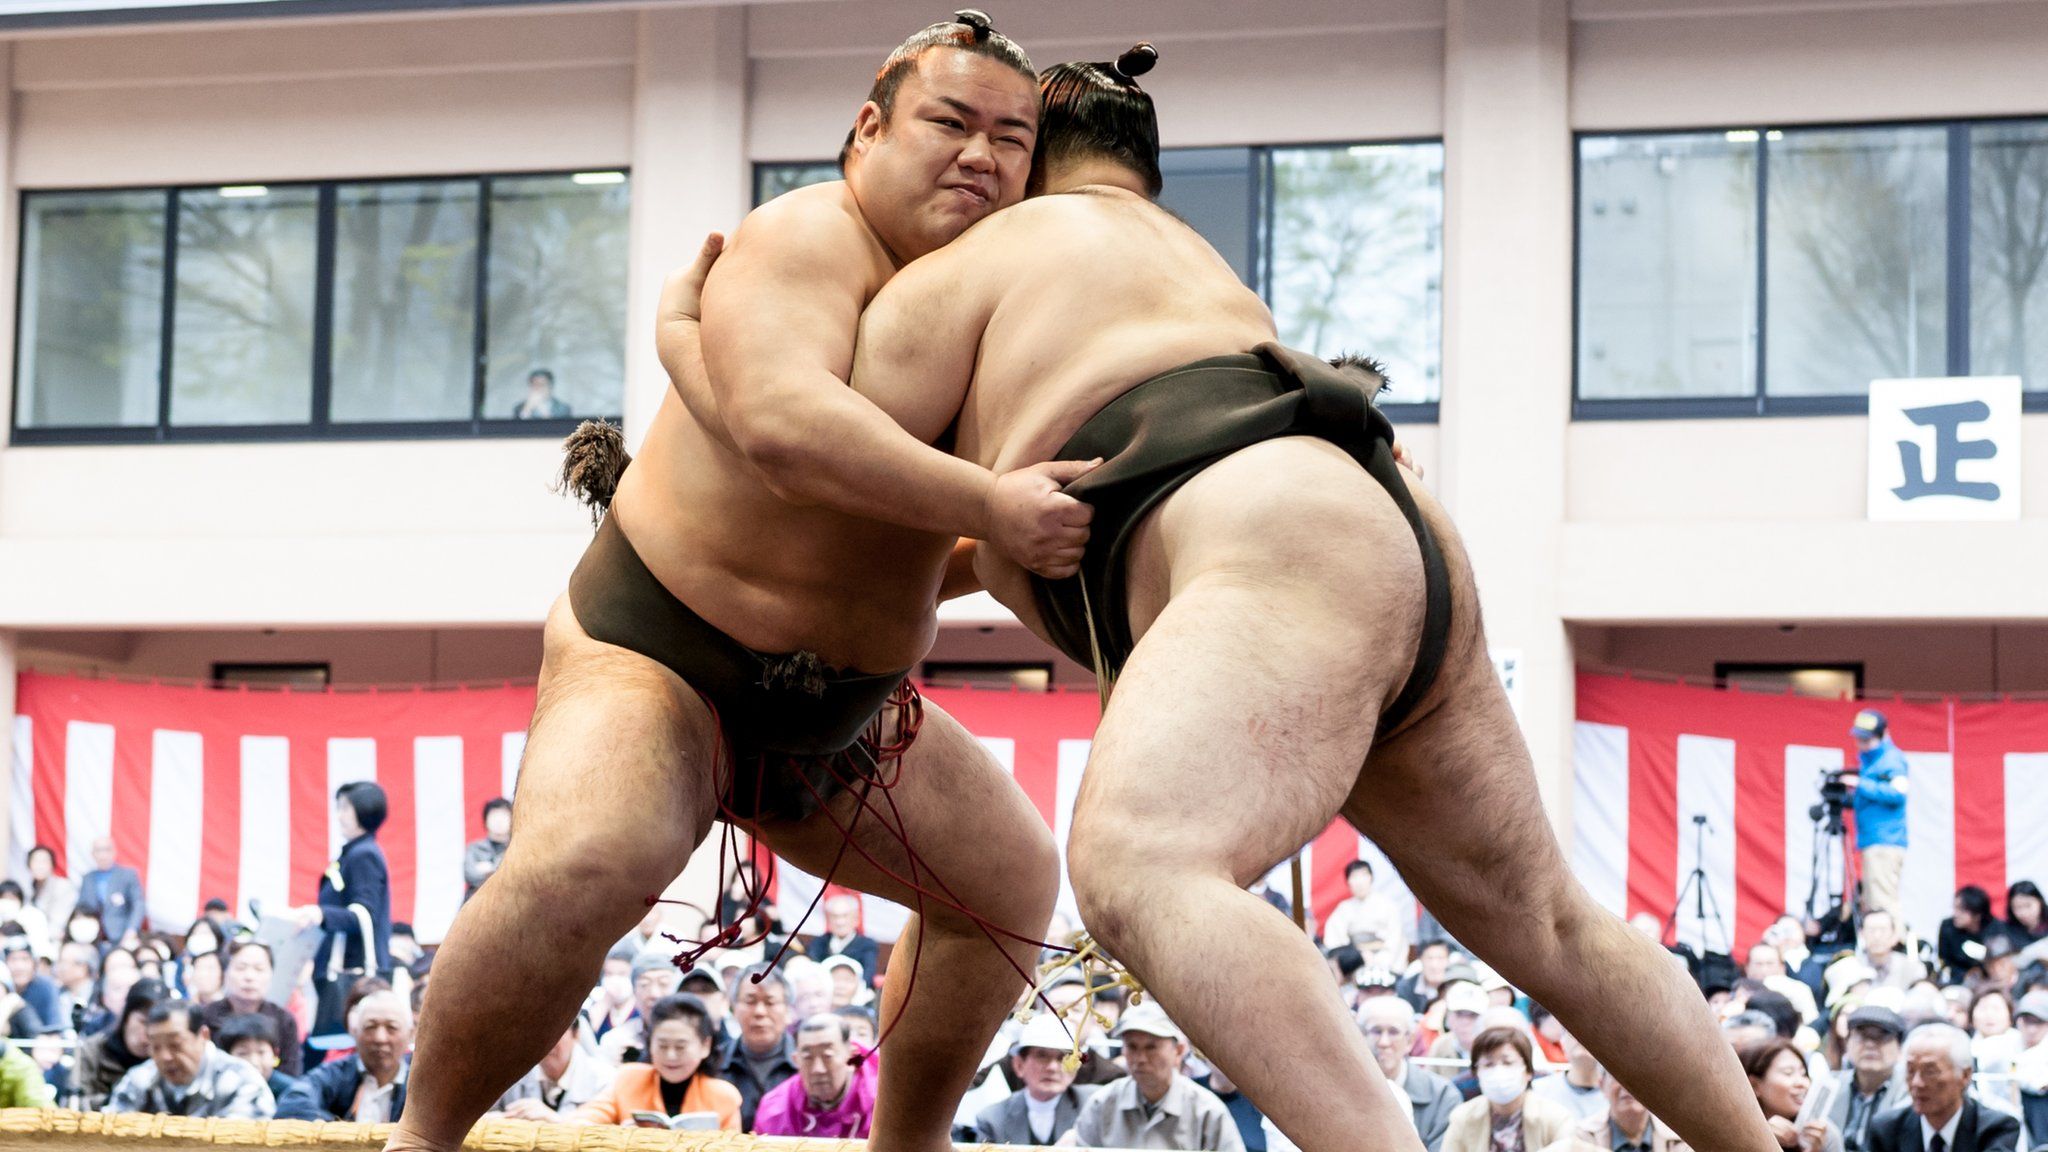 Two men sumo wrestling